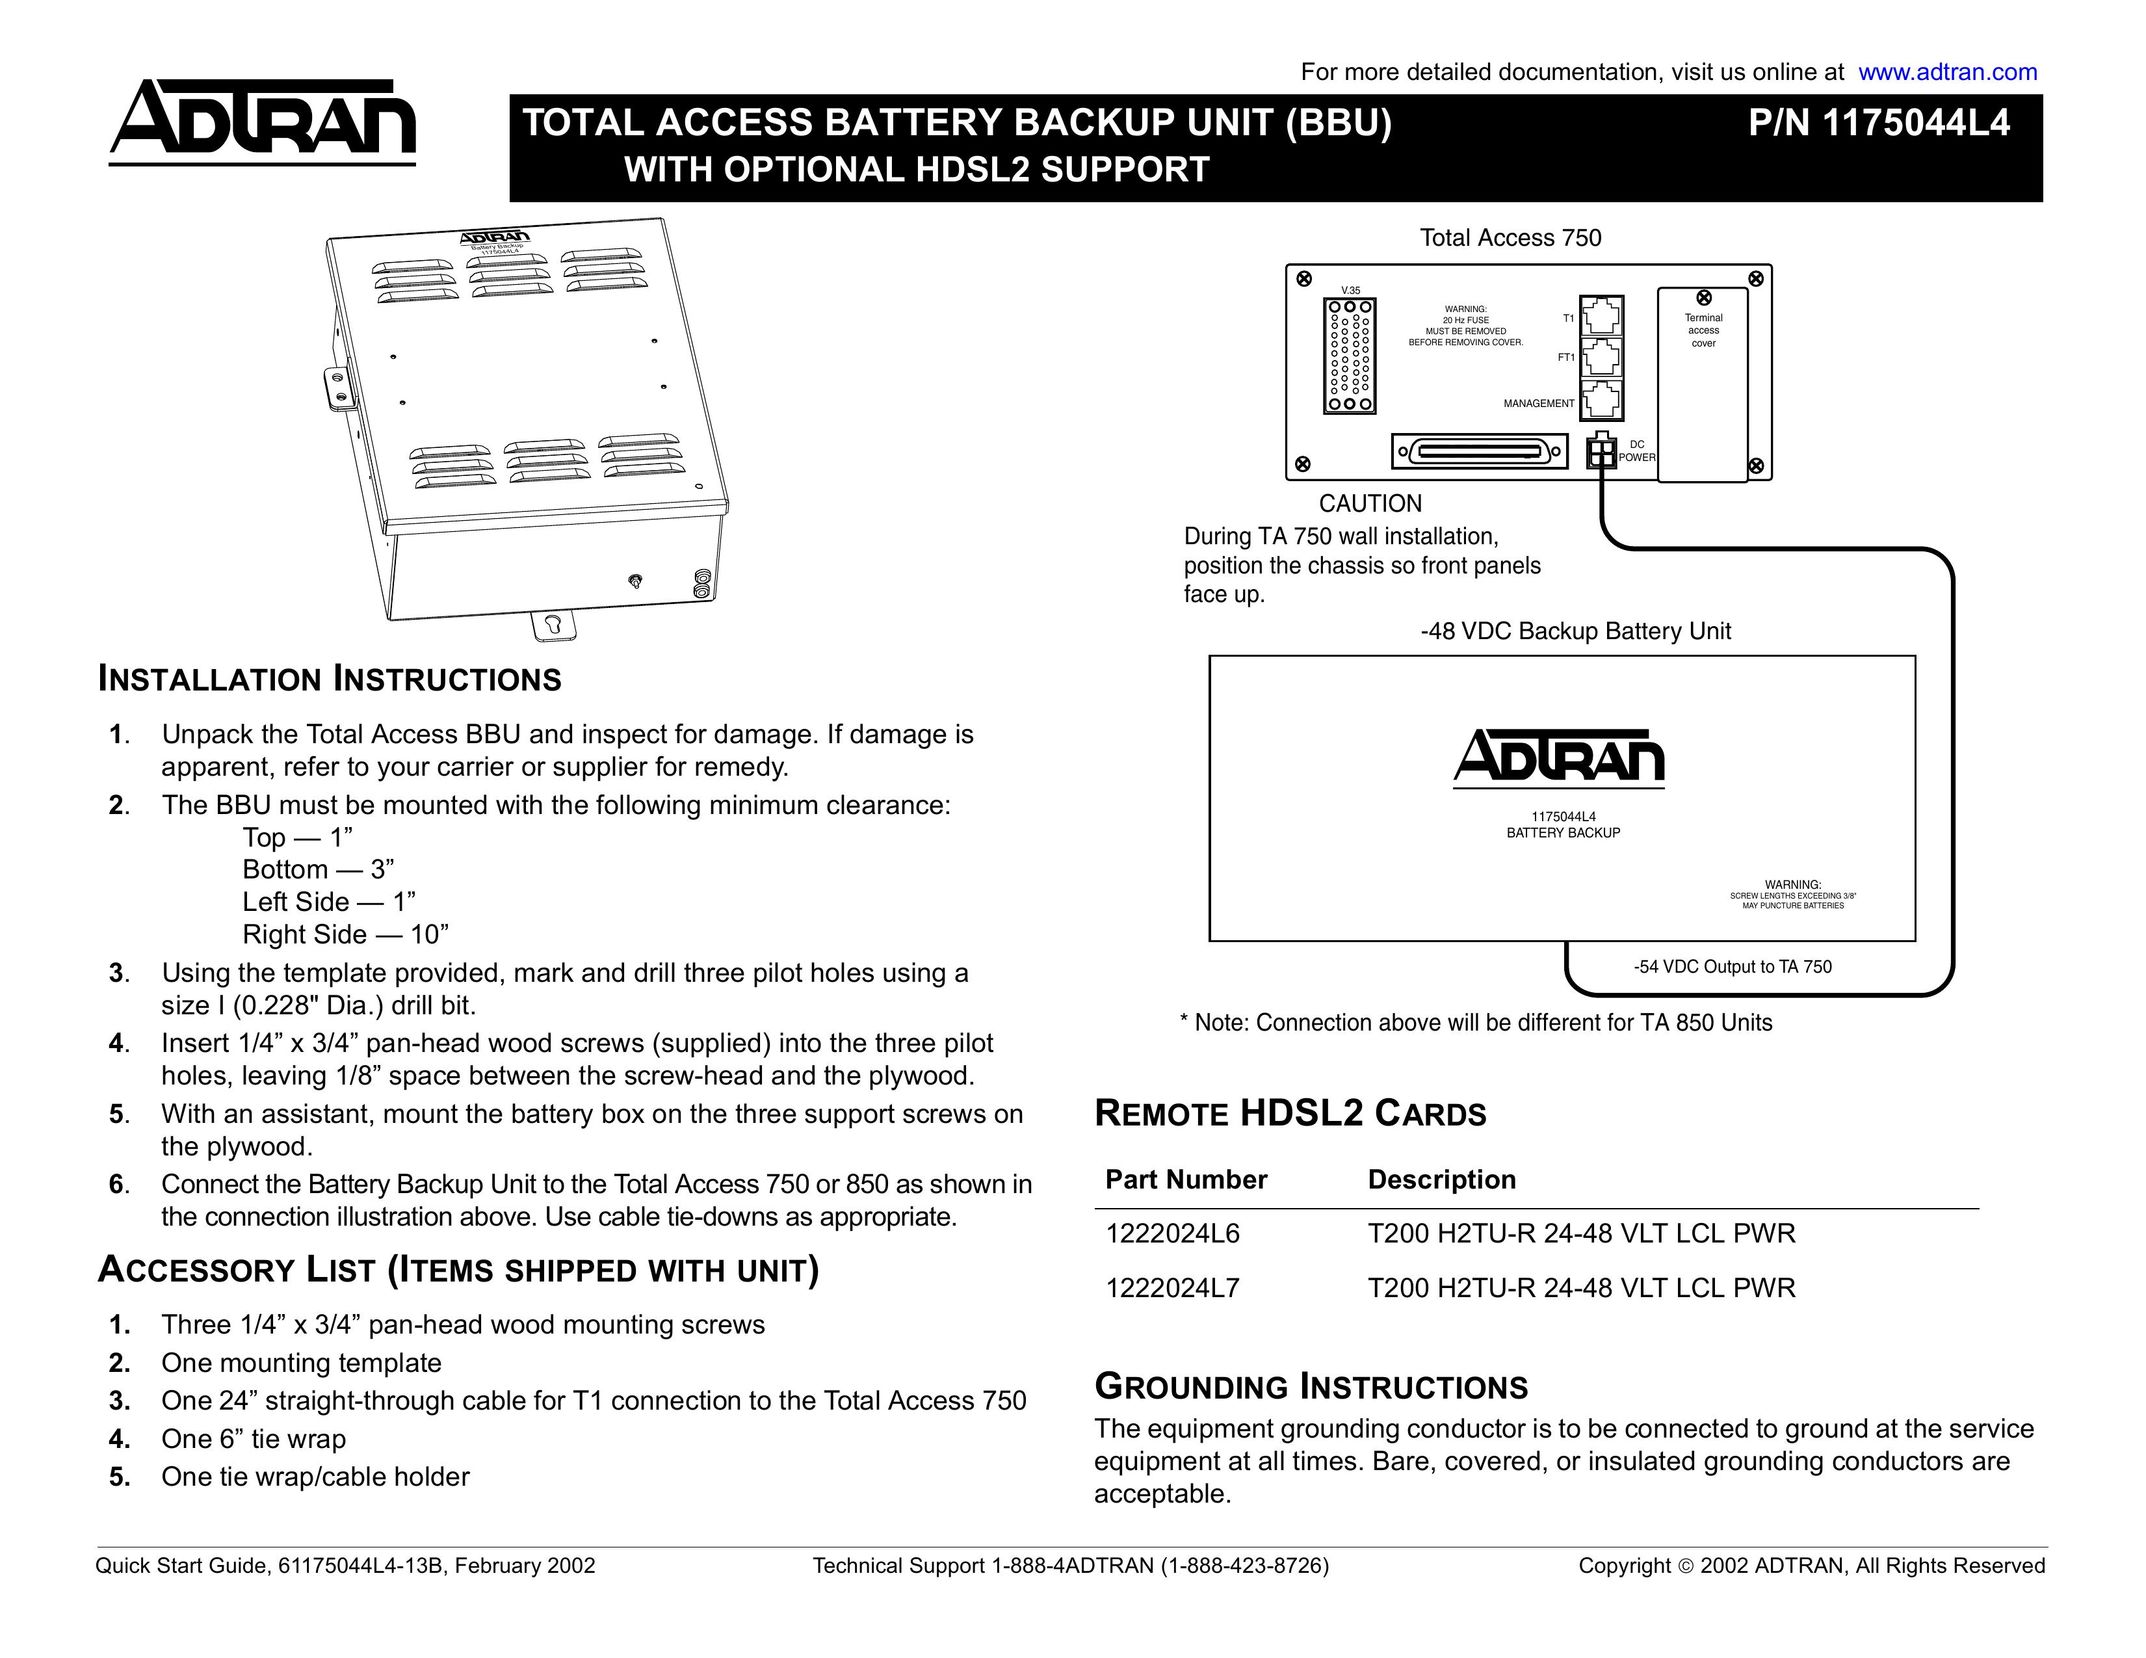 ADTRAN HDSL2 Battery Charger User Manual